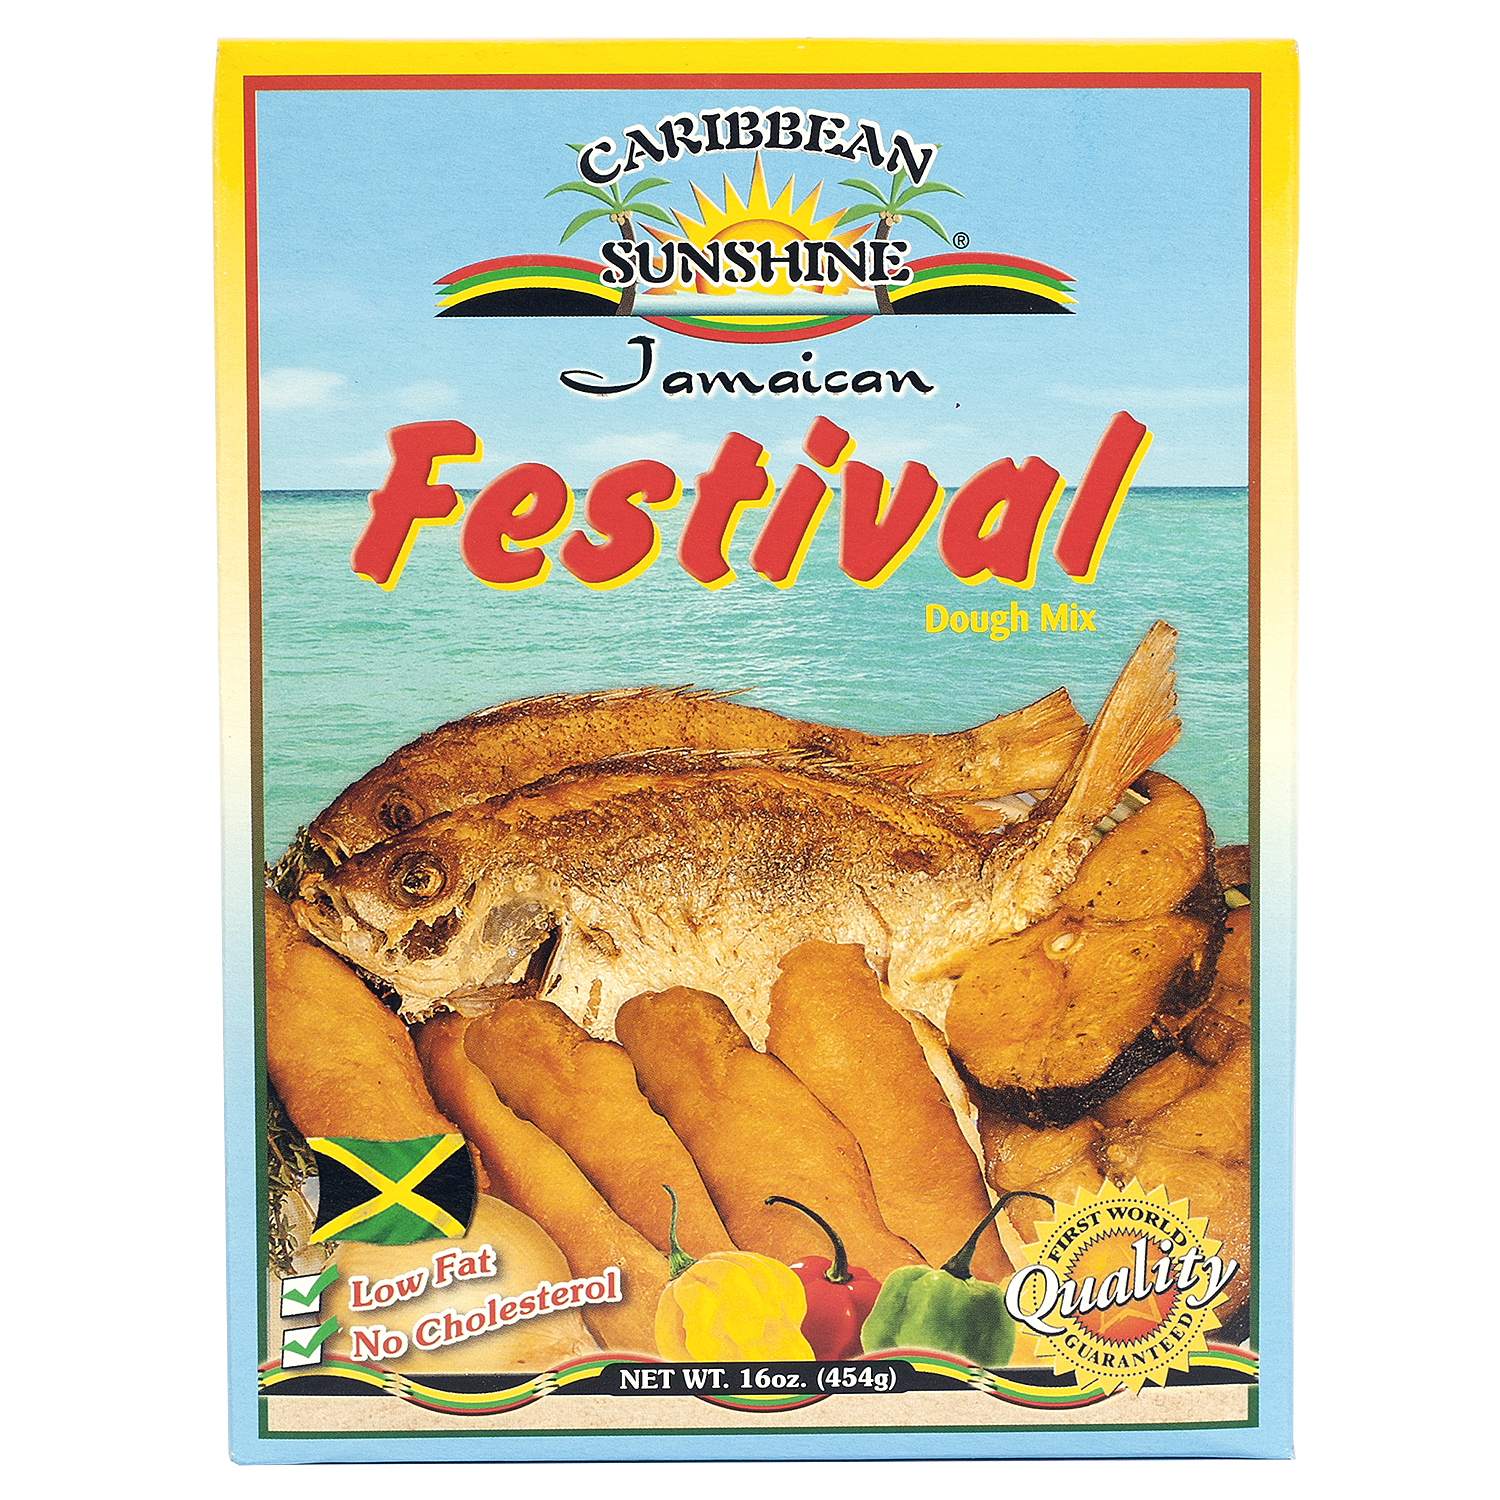 Festival Jamaican Food Ph